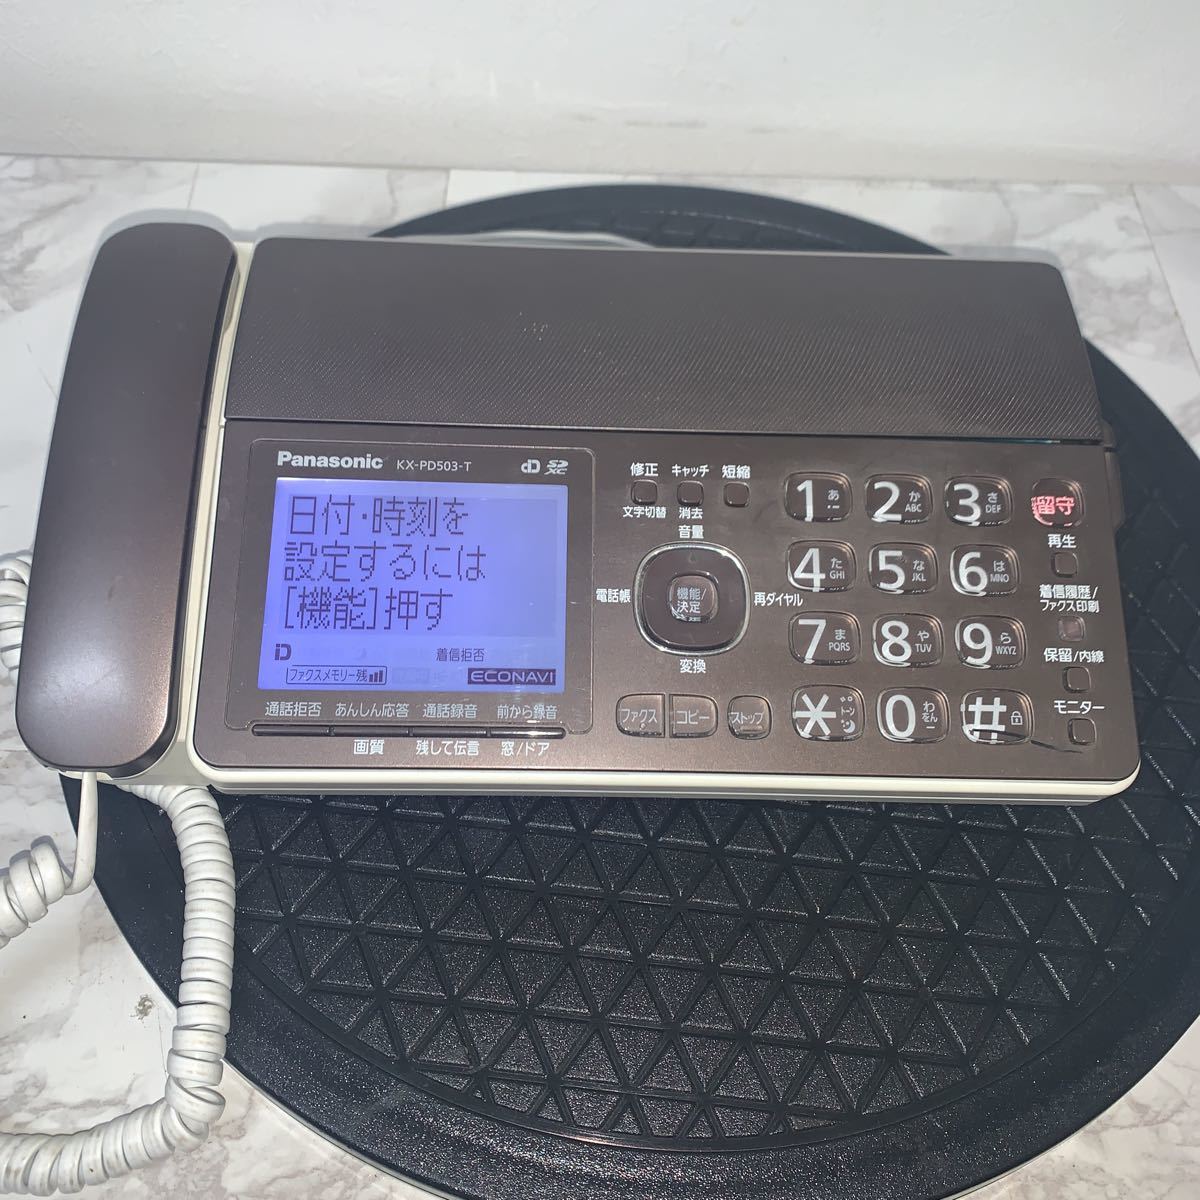  Panasonic fax telephone machine KX-PD503-T (33)